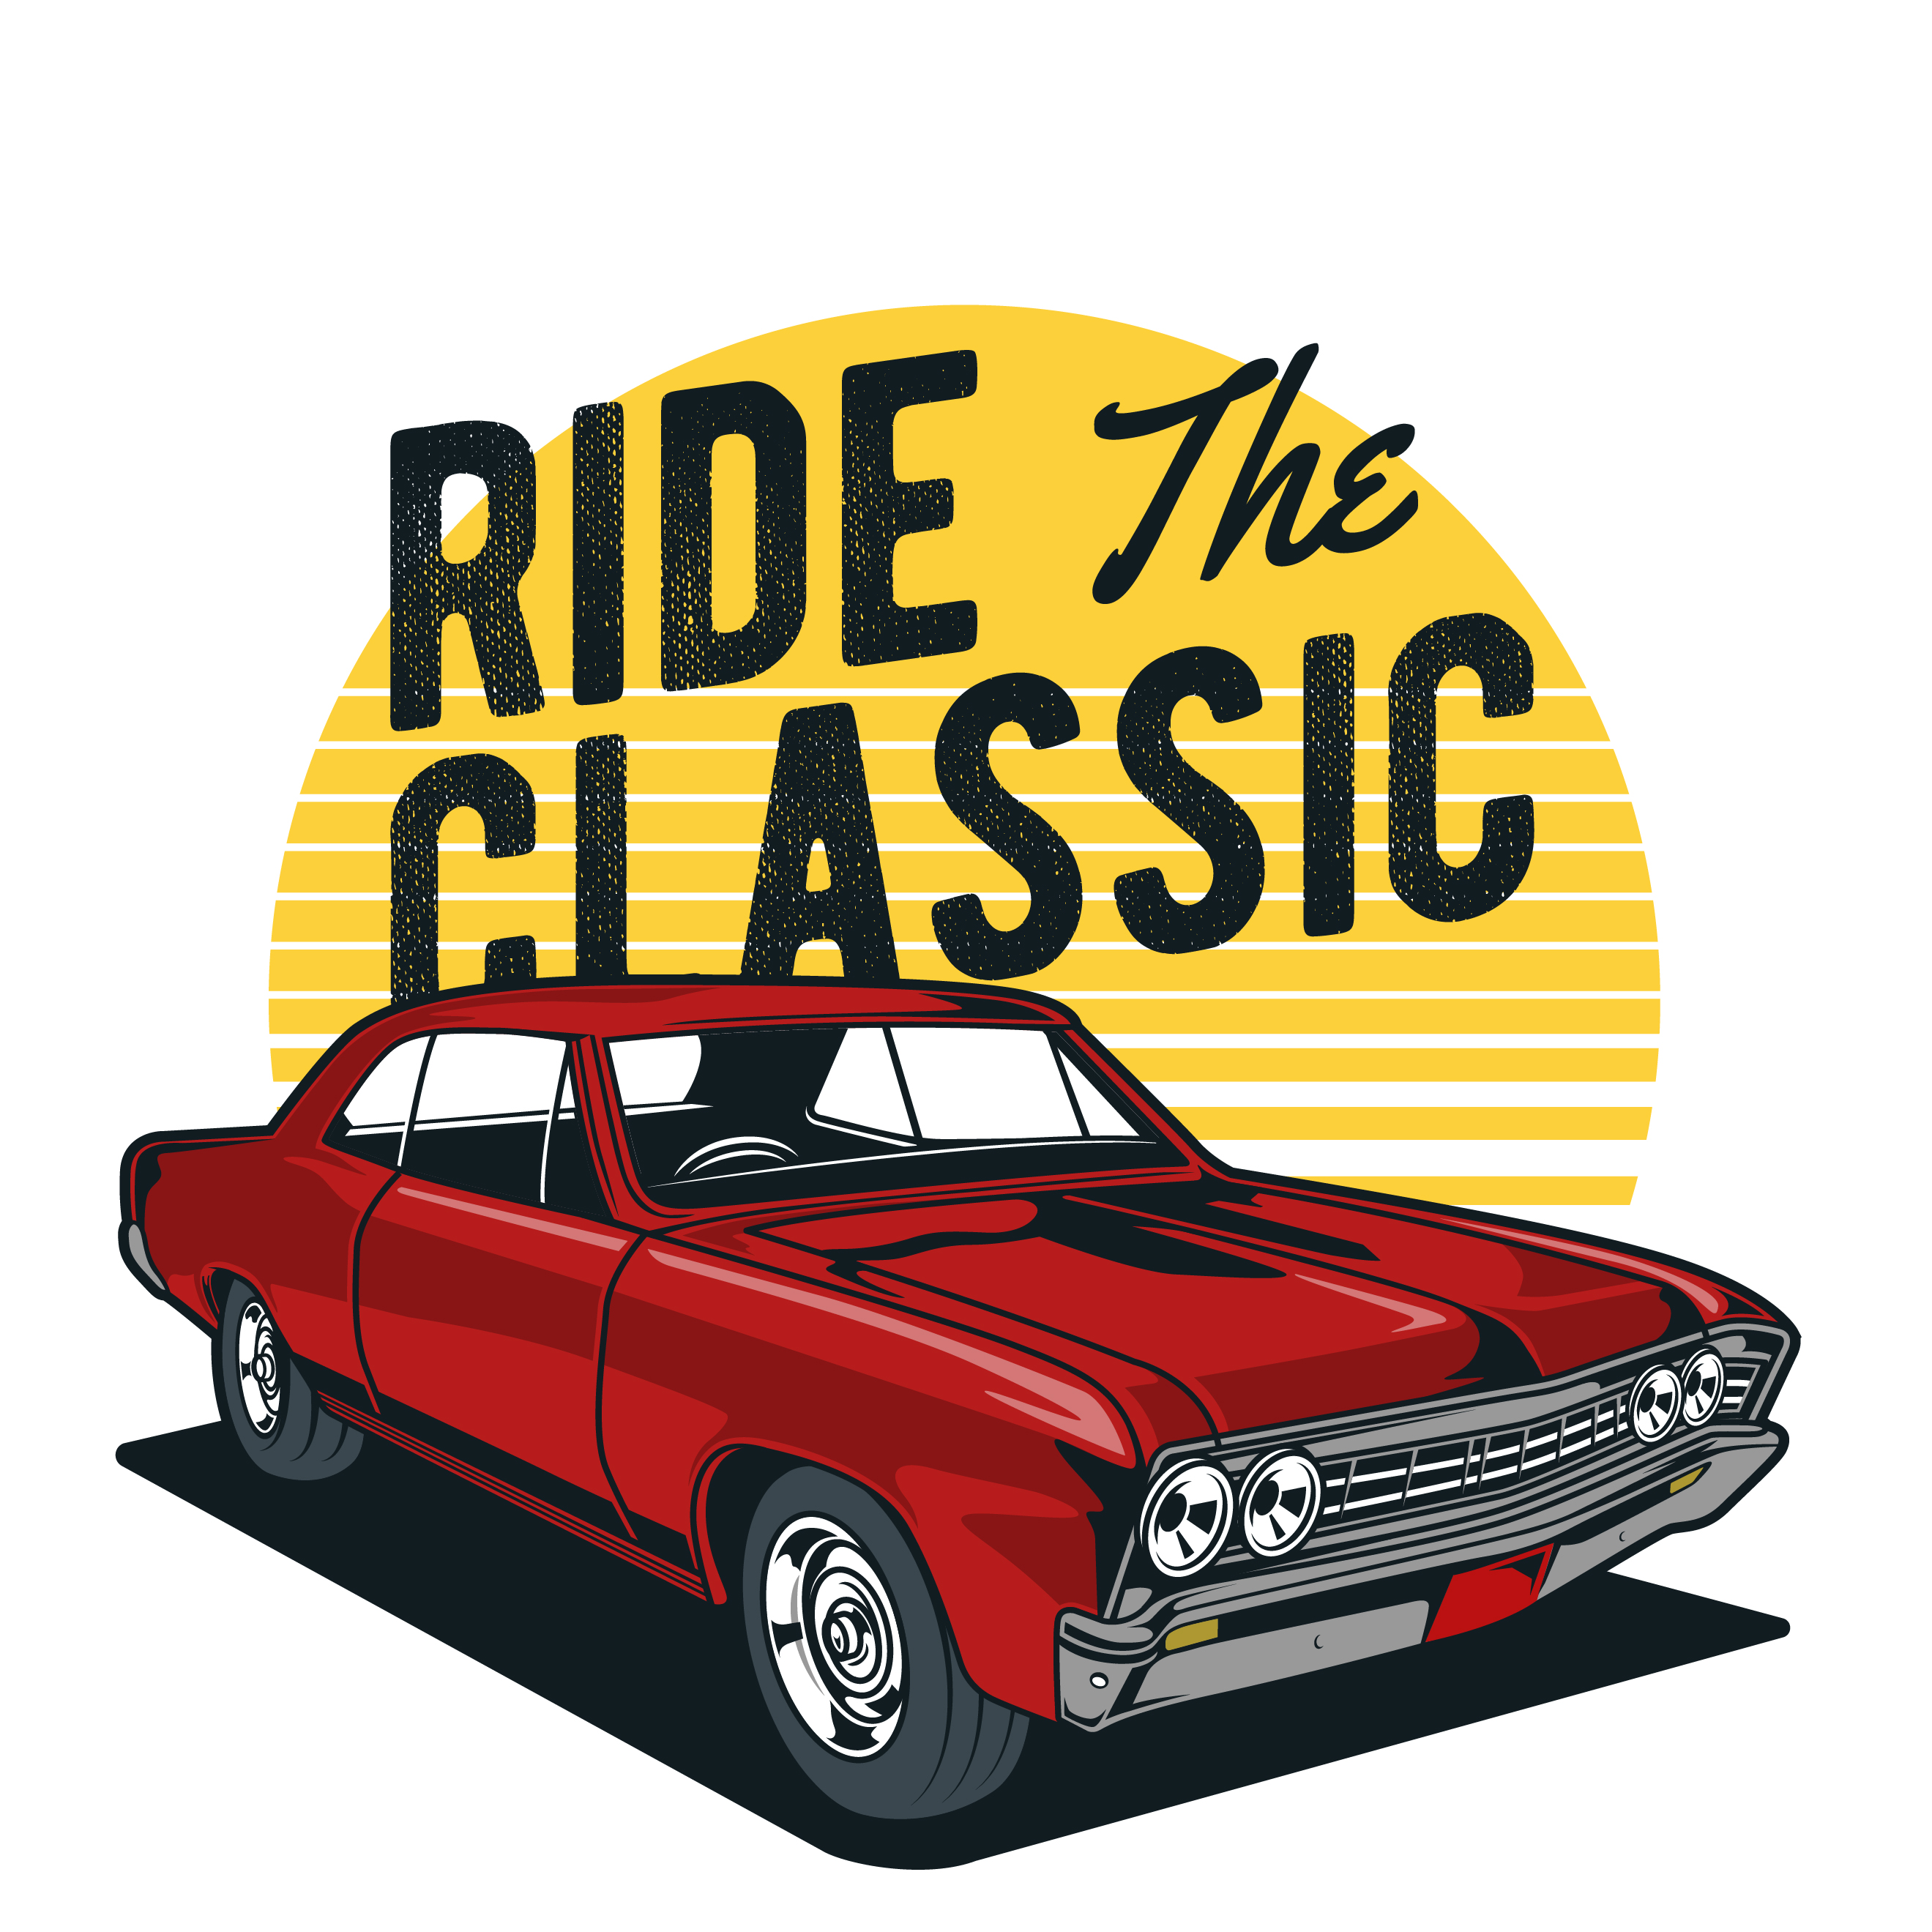 Download Red classic muscle car design - Download Free Vectors, Clipart Graphics & Vector Art